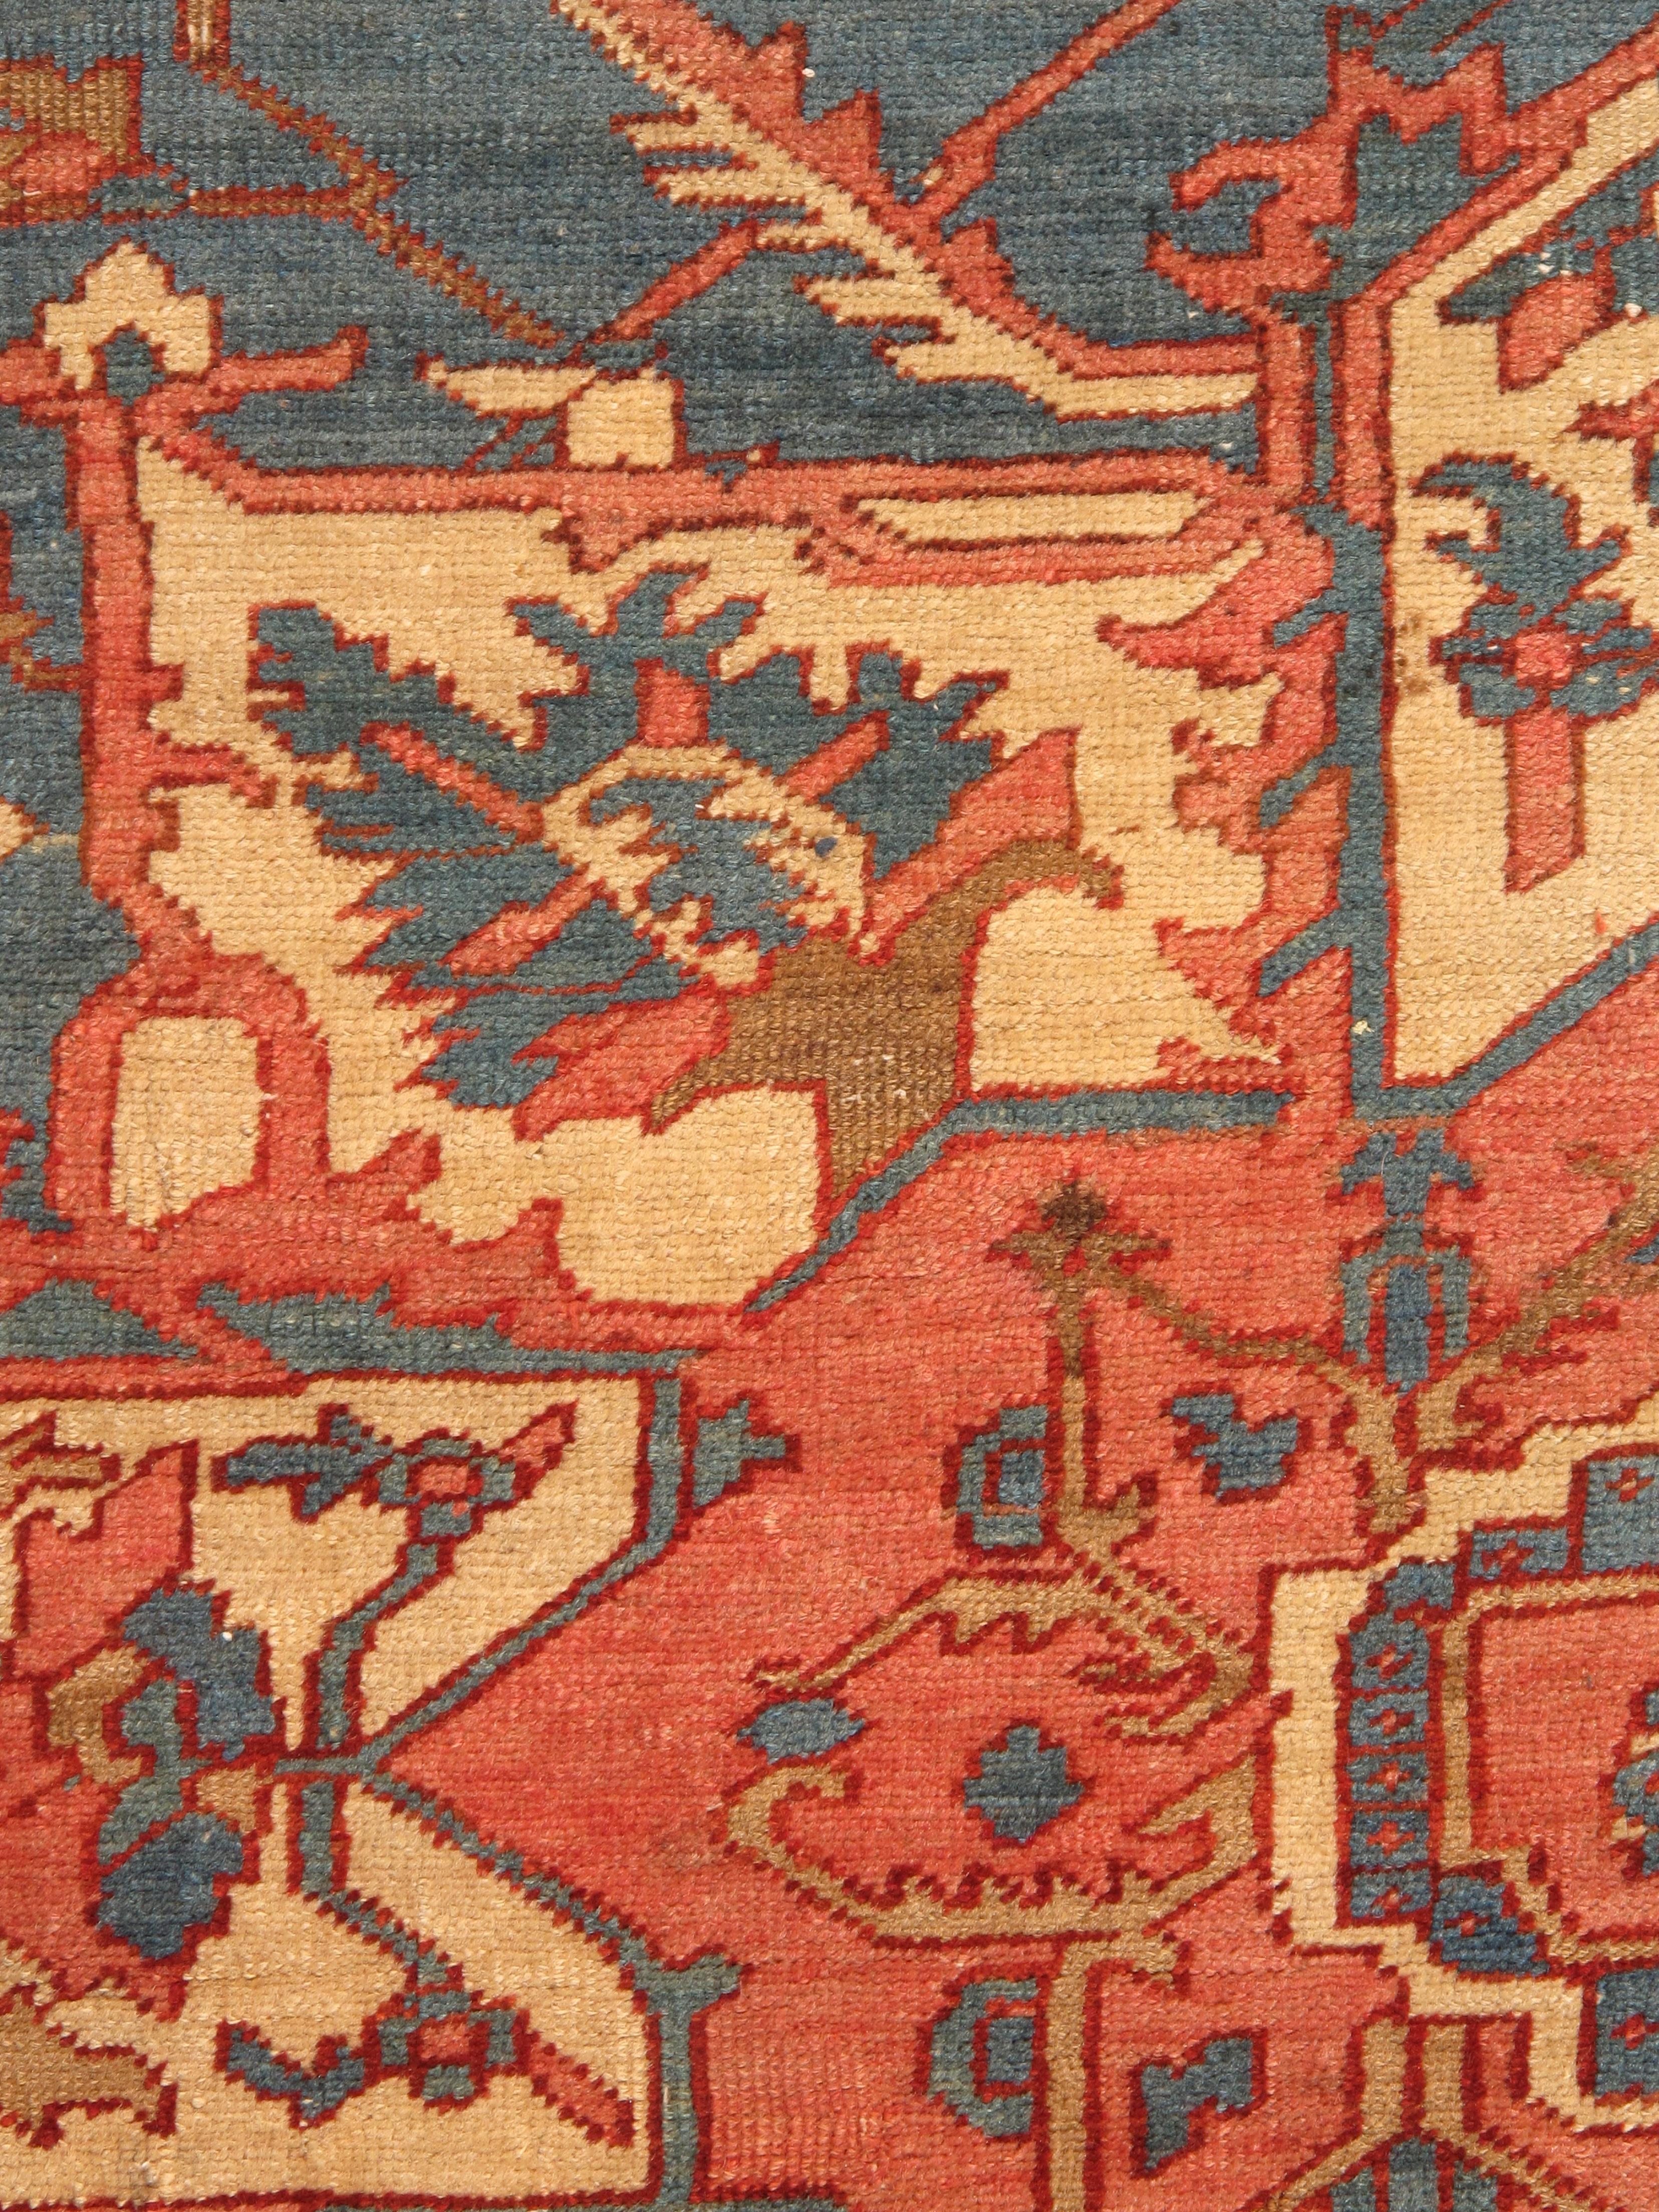 19th Century Antique Persian Serapi Carpet, Handmade Rug Light Blue, Ivory, Rusty Red For Sale